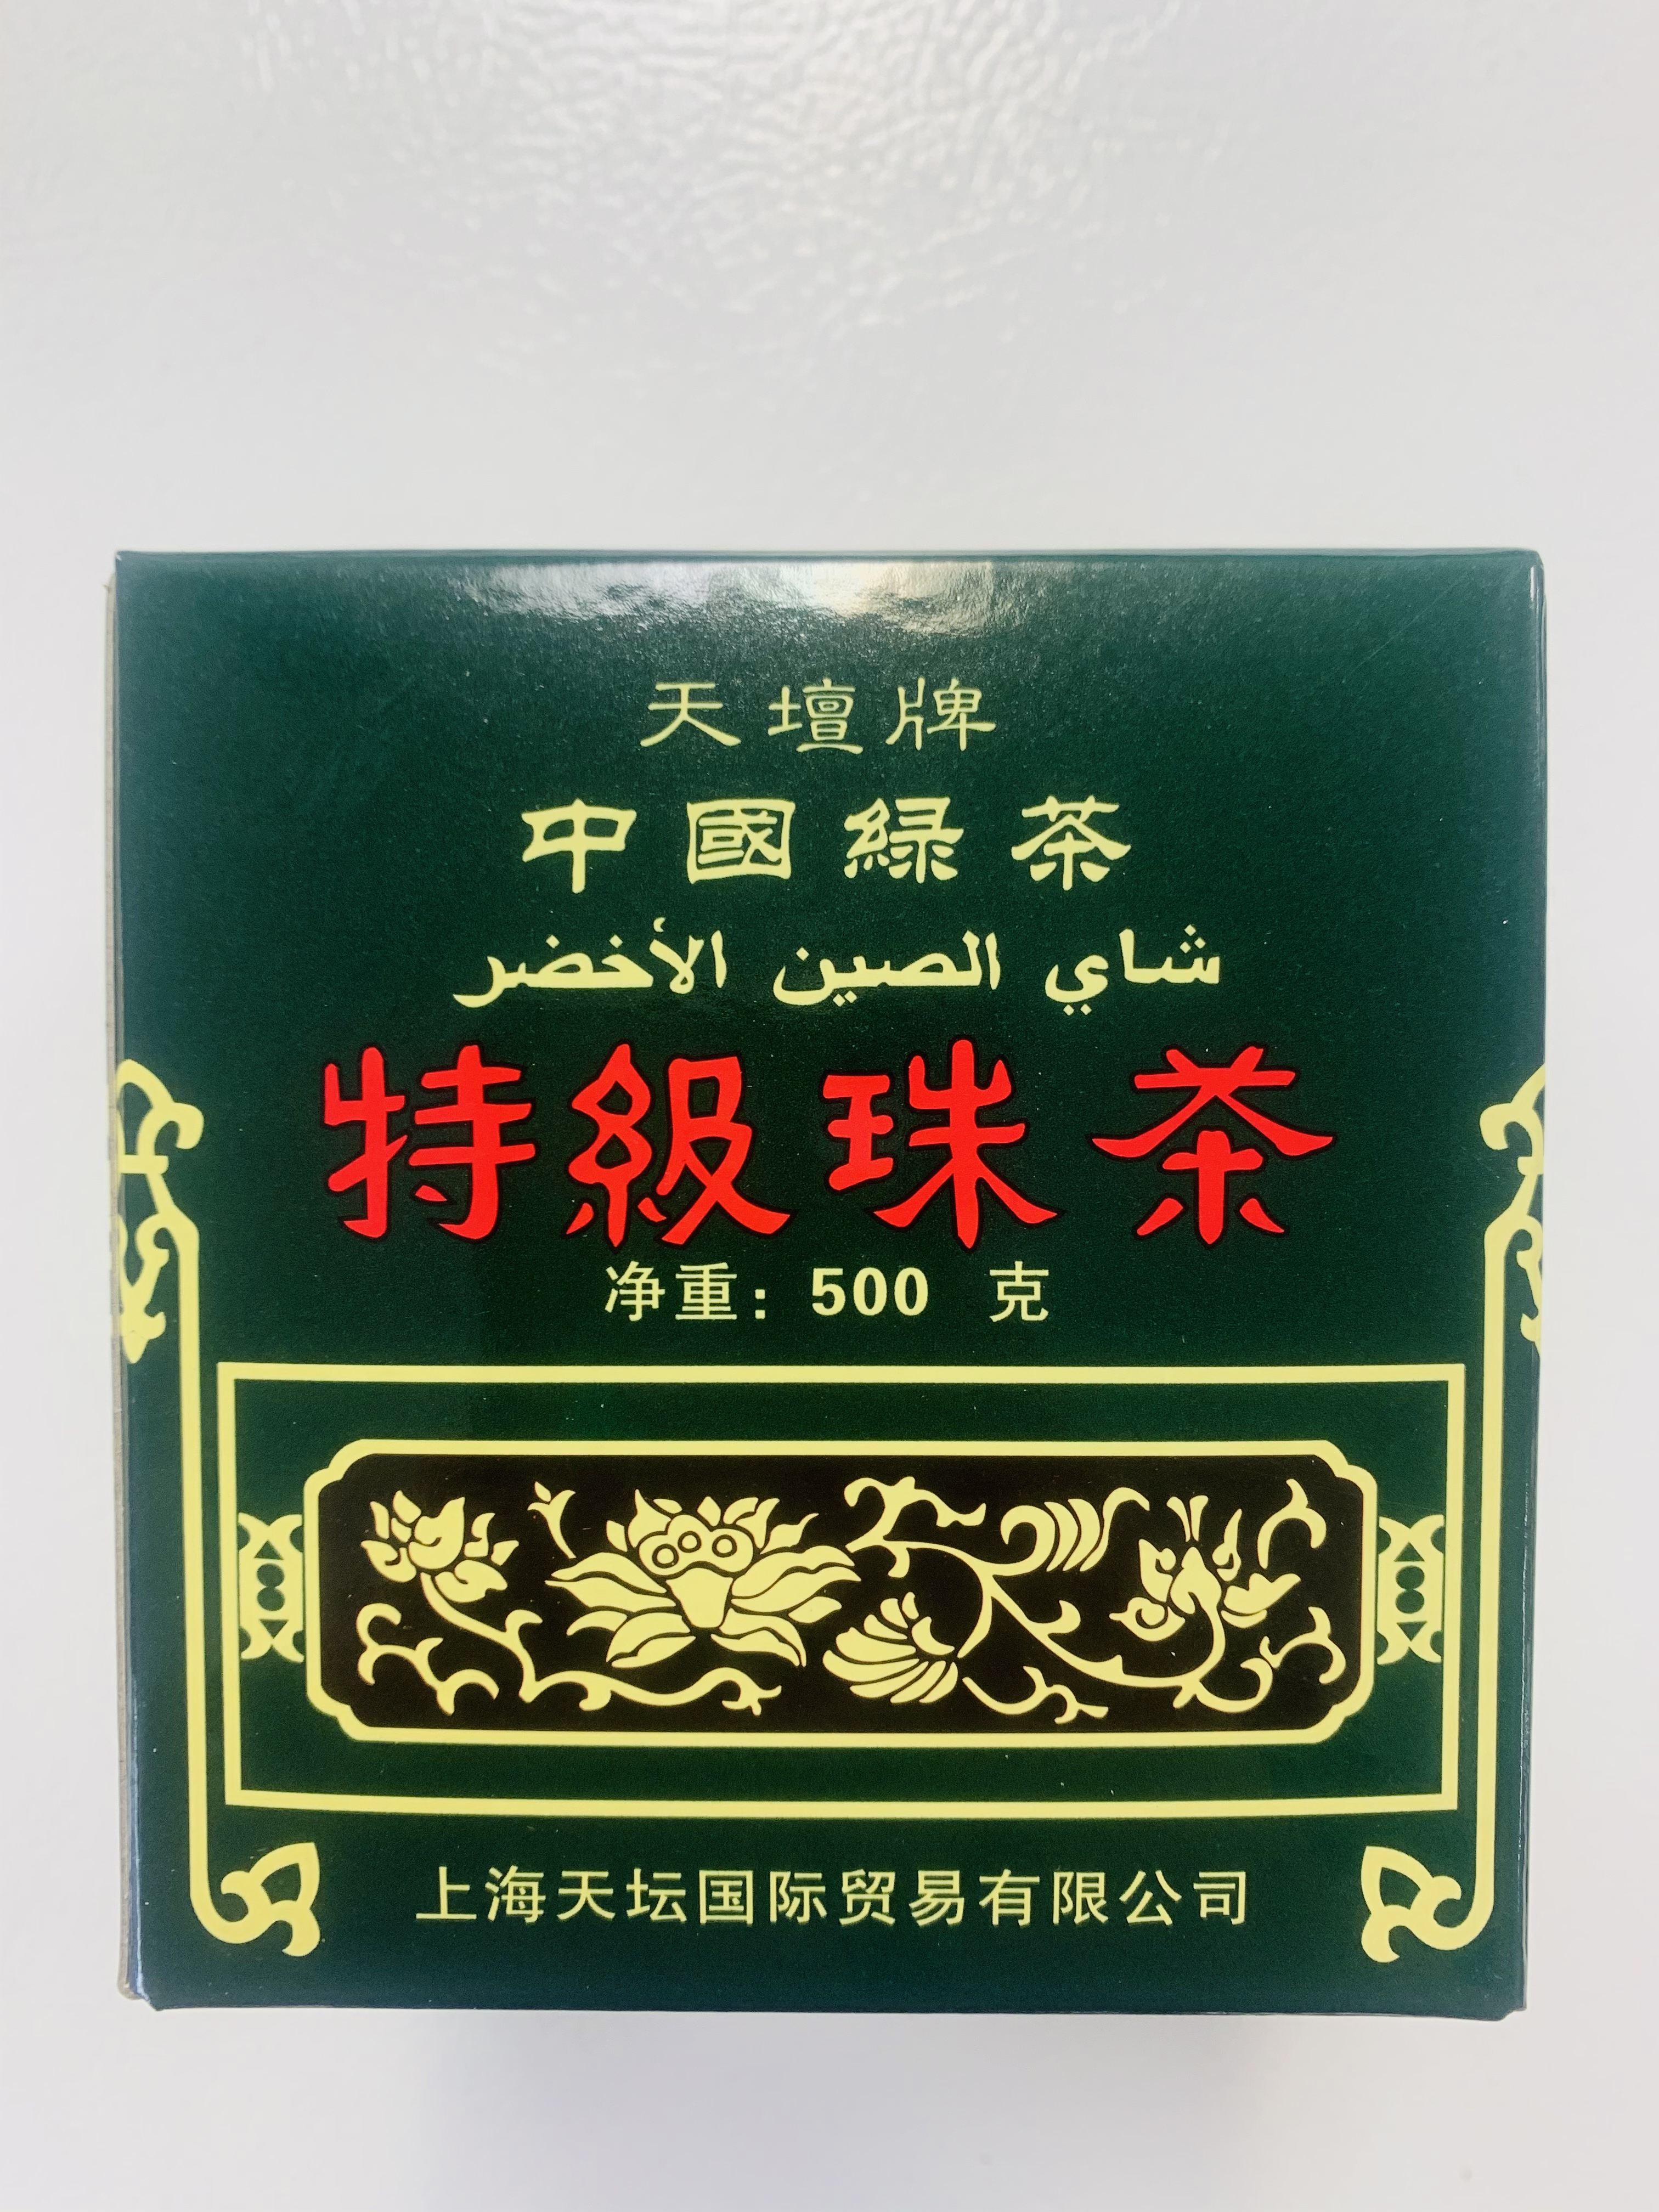 China Green tea<br>6.49$